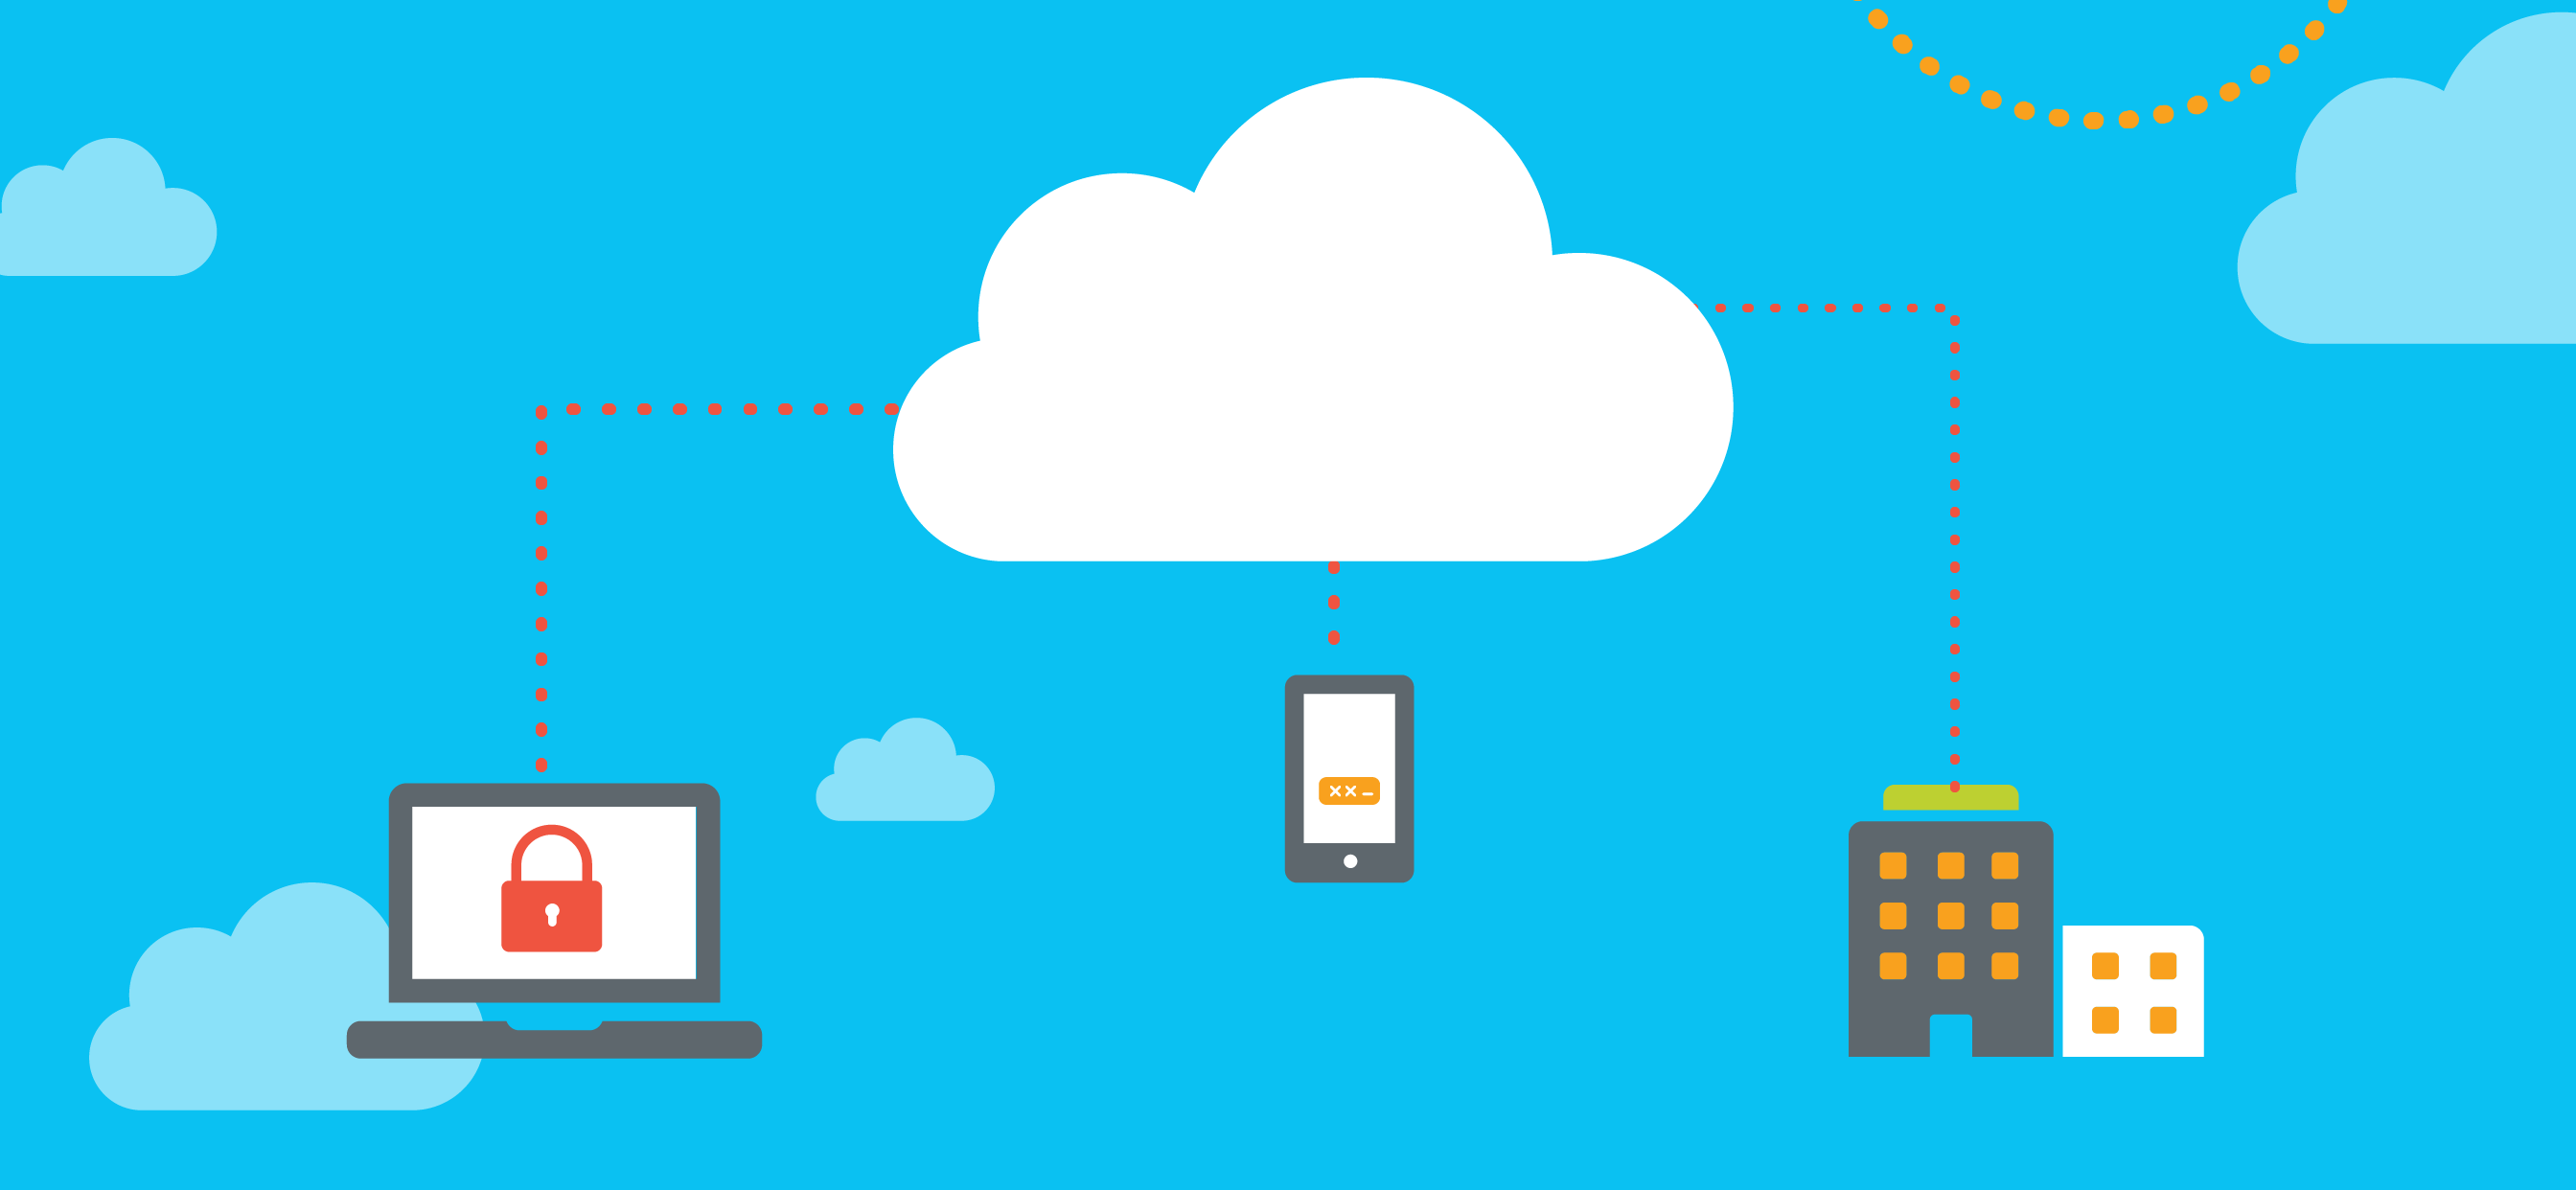 Cloud Guidepost: The benefits of Citrix Secure Workspace Access | Citrix  Blogs